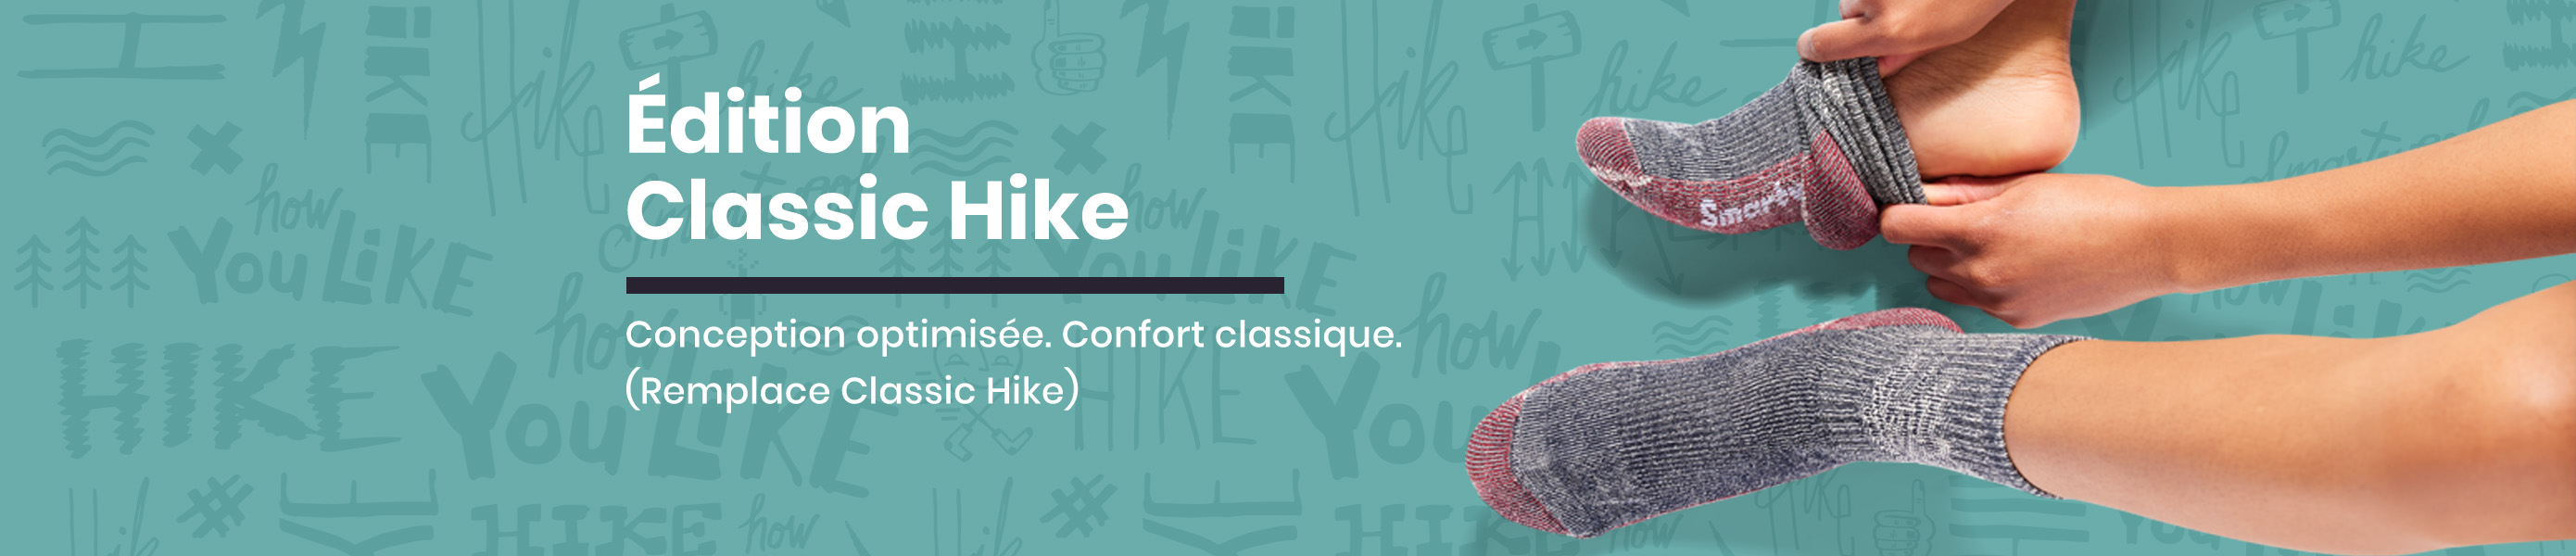 Chaussettes Hike Classic Edition pour Hommes